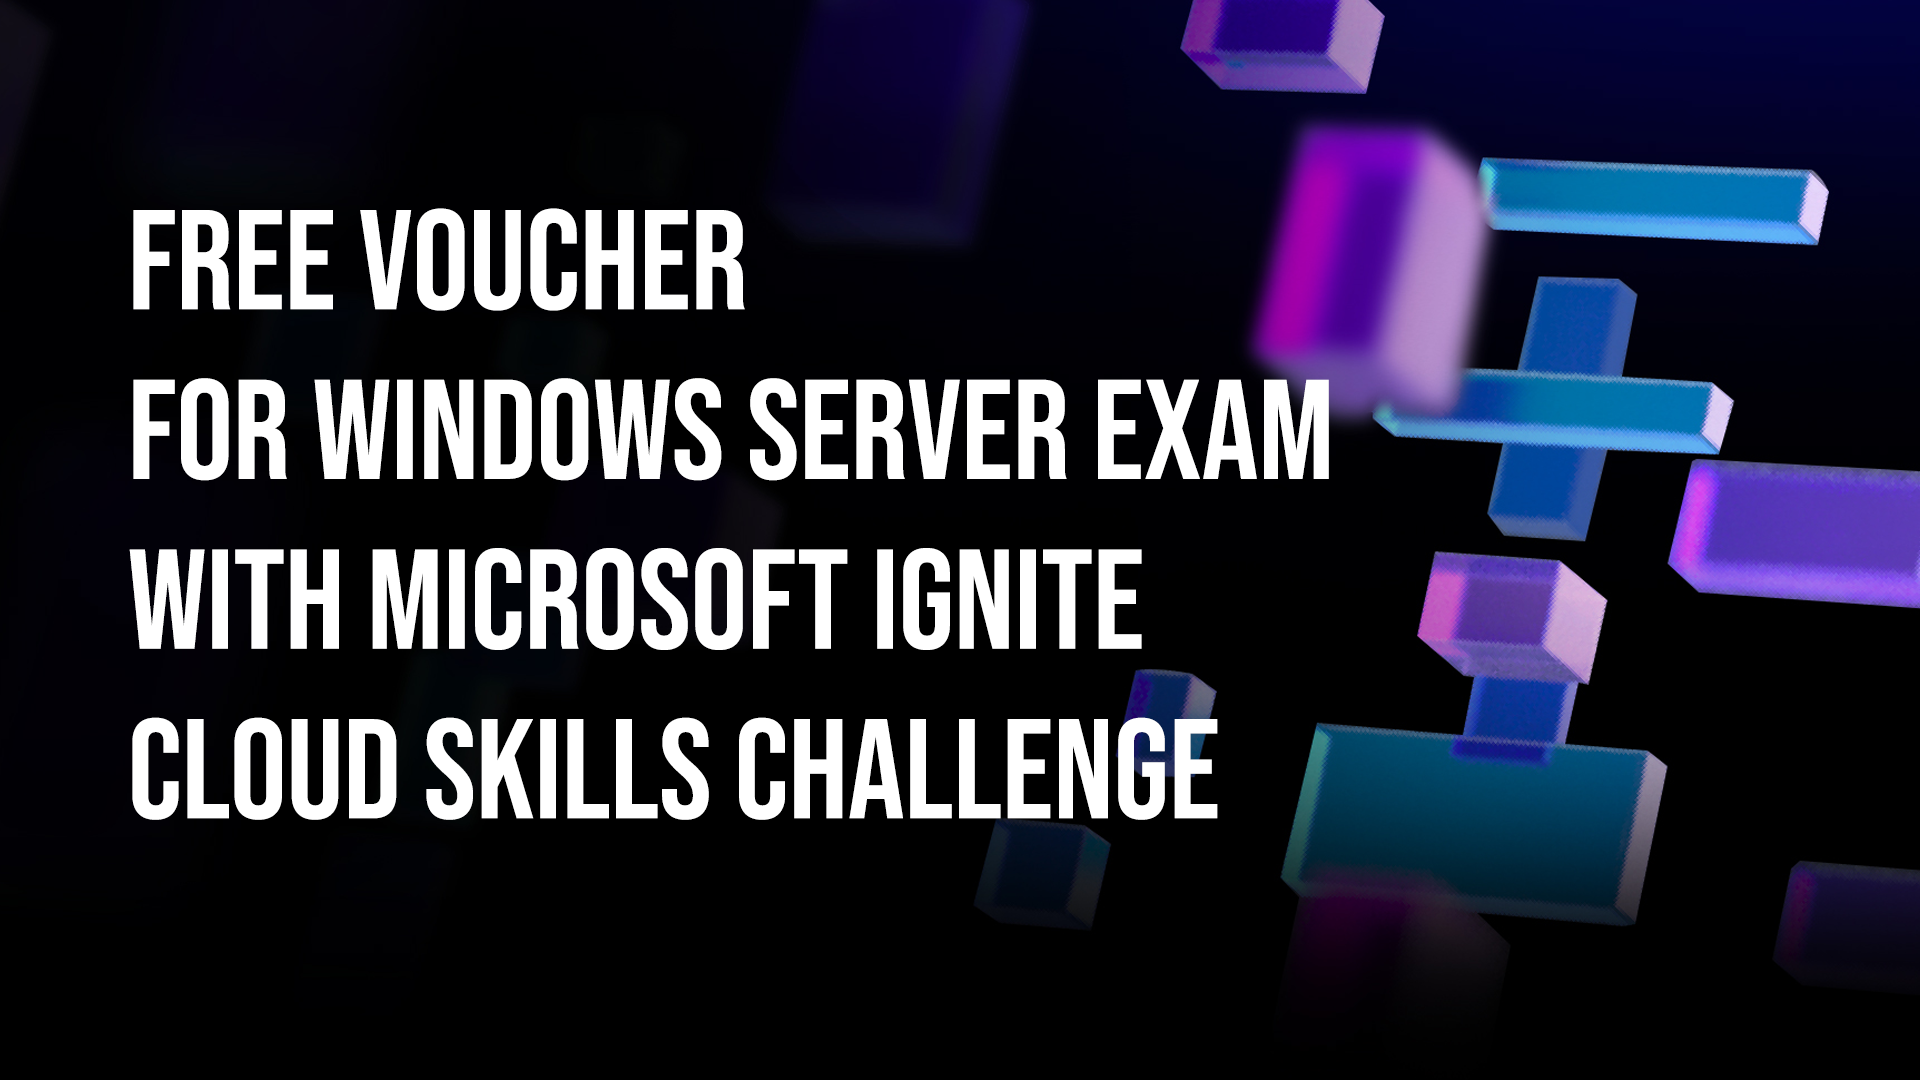 Free Voucher for Windows Server exam with Microsoft Ignite Cloud Skills Challenge